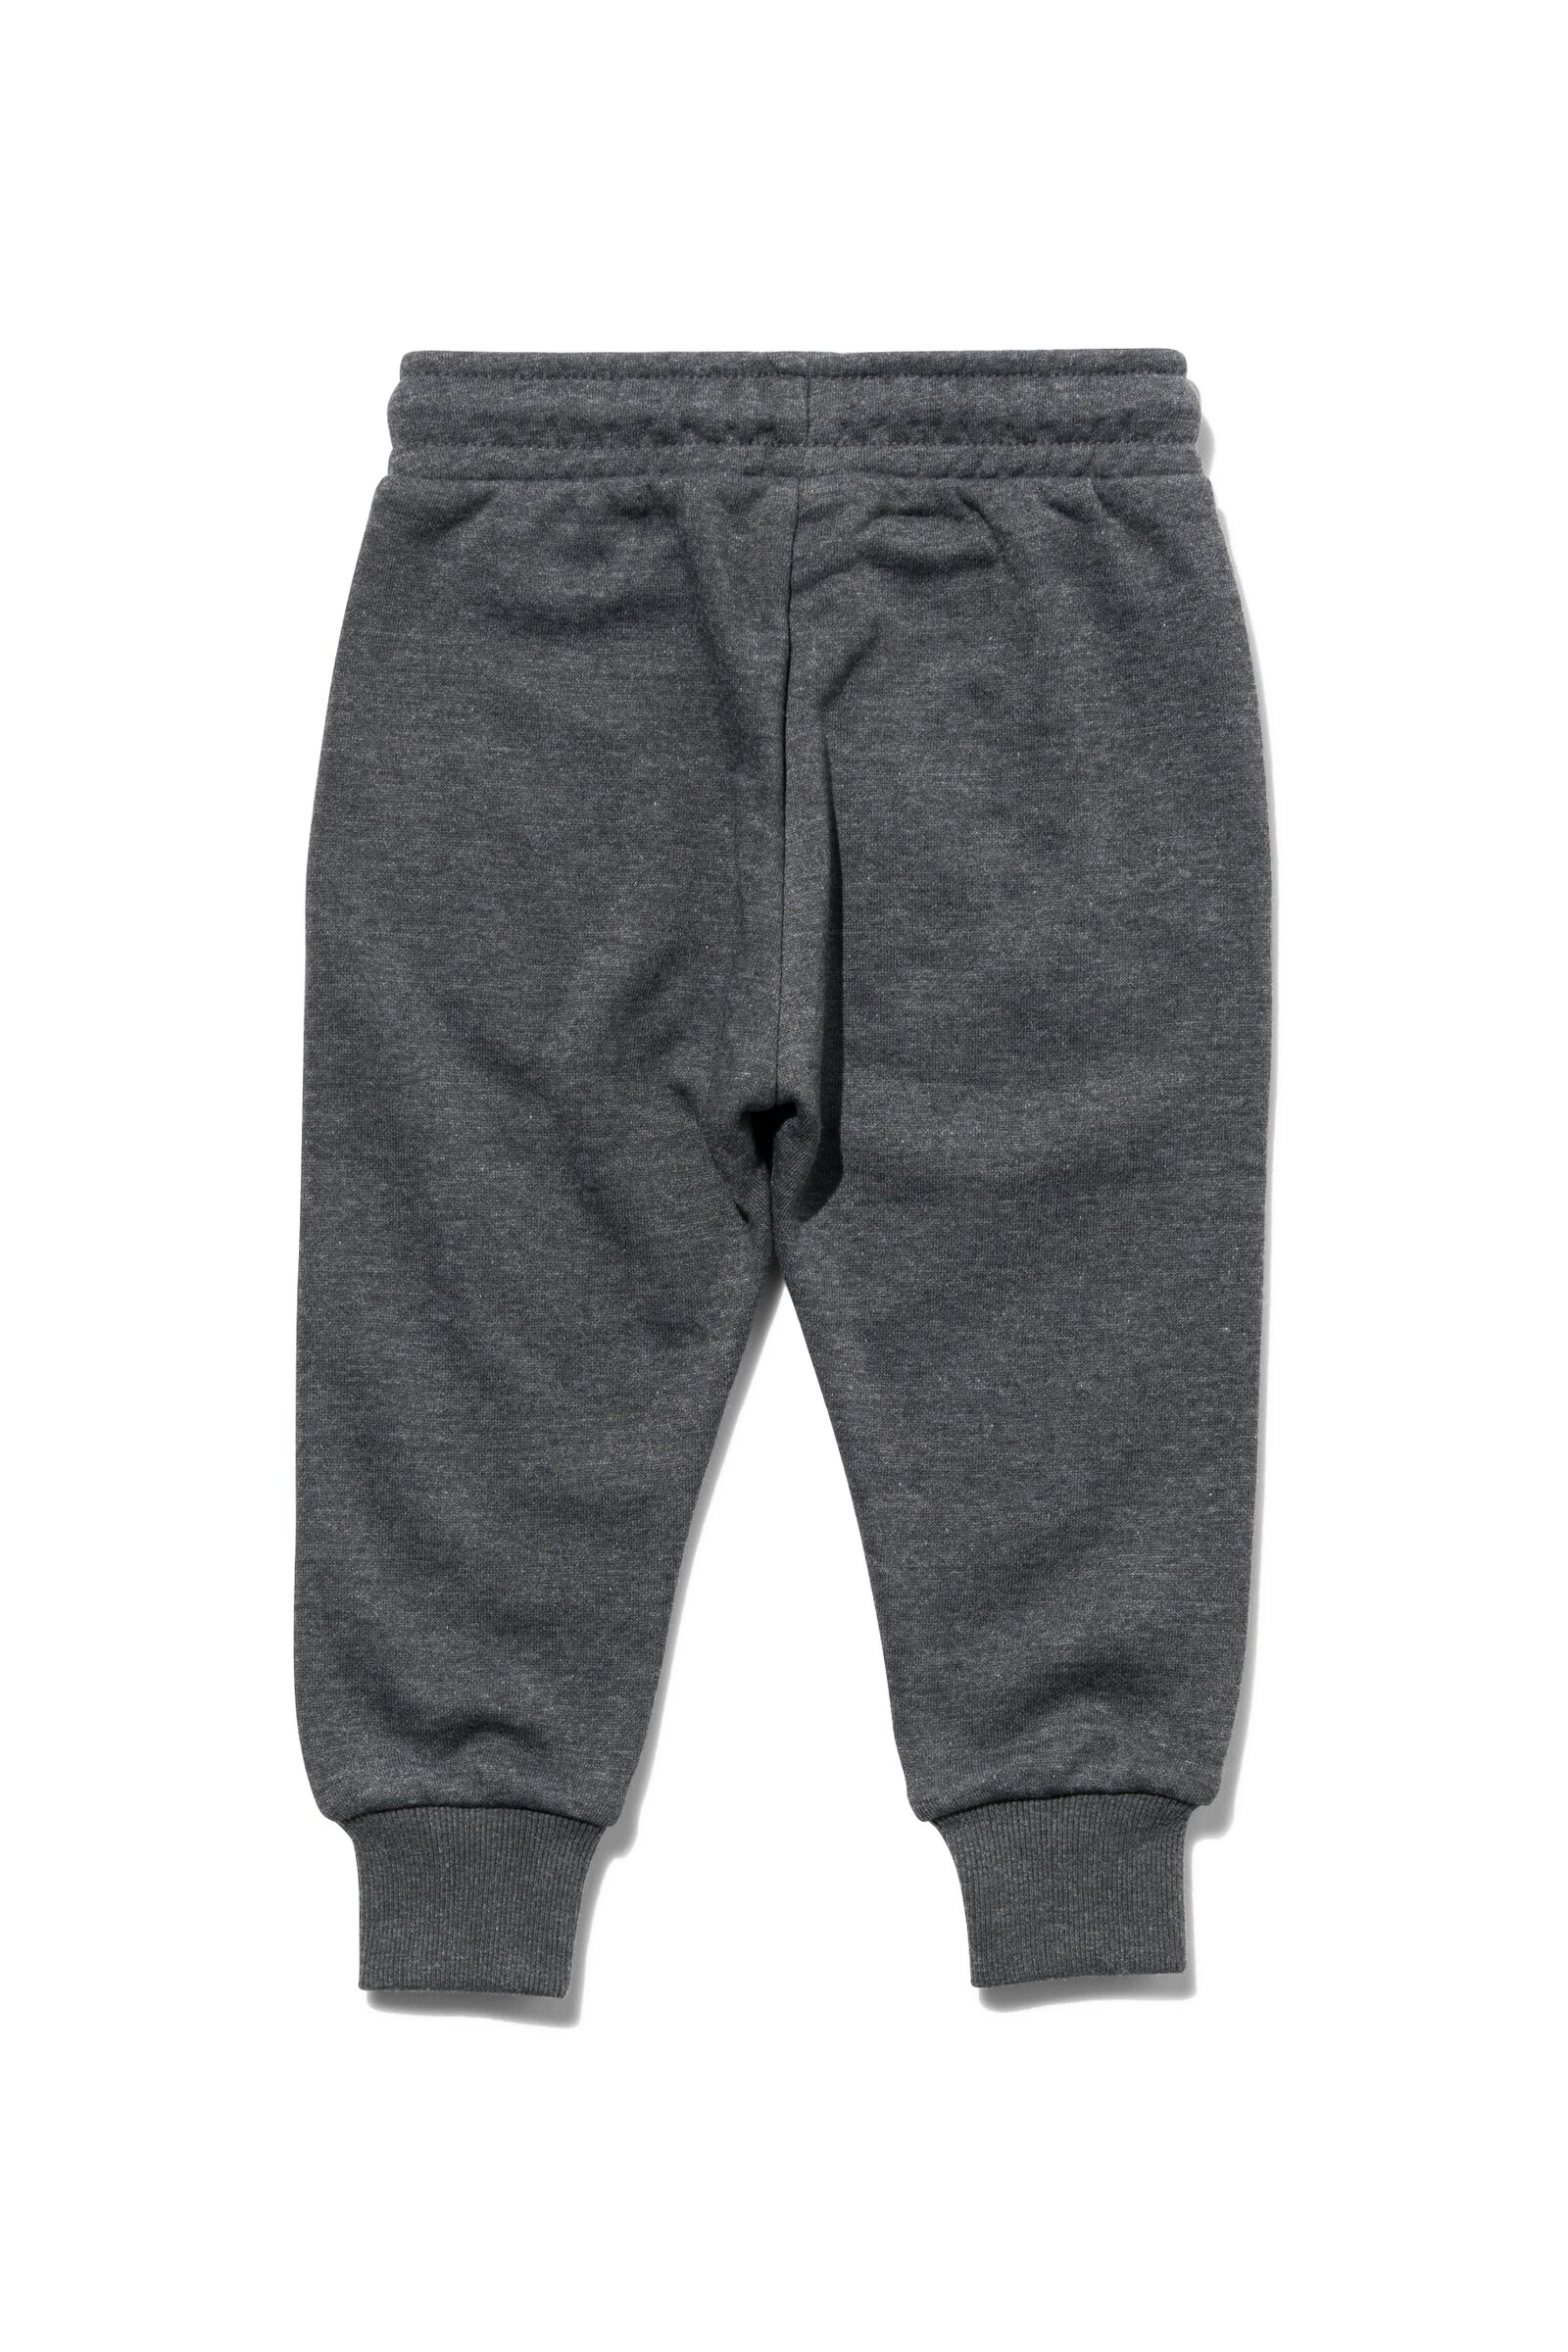 pantalon sweat bébé gris foncé 68 - 33171044 - HEMA